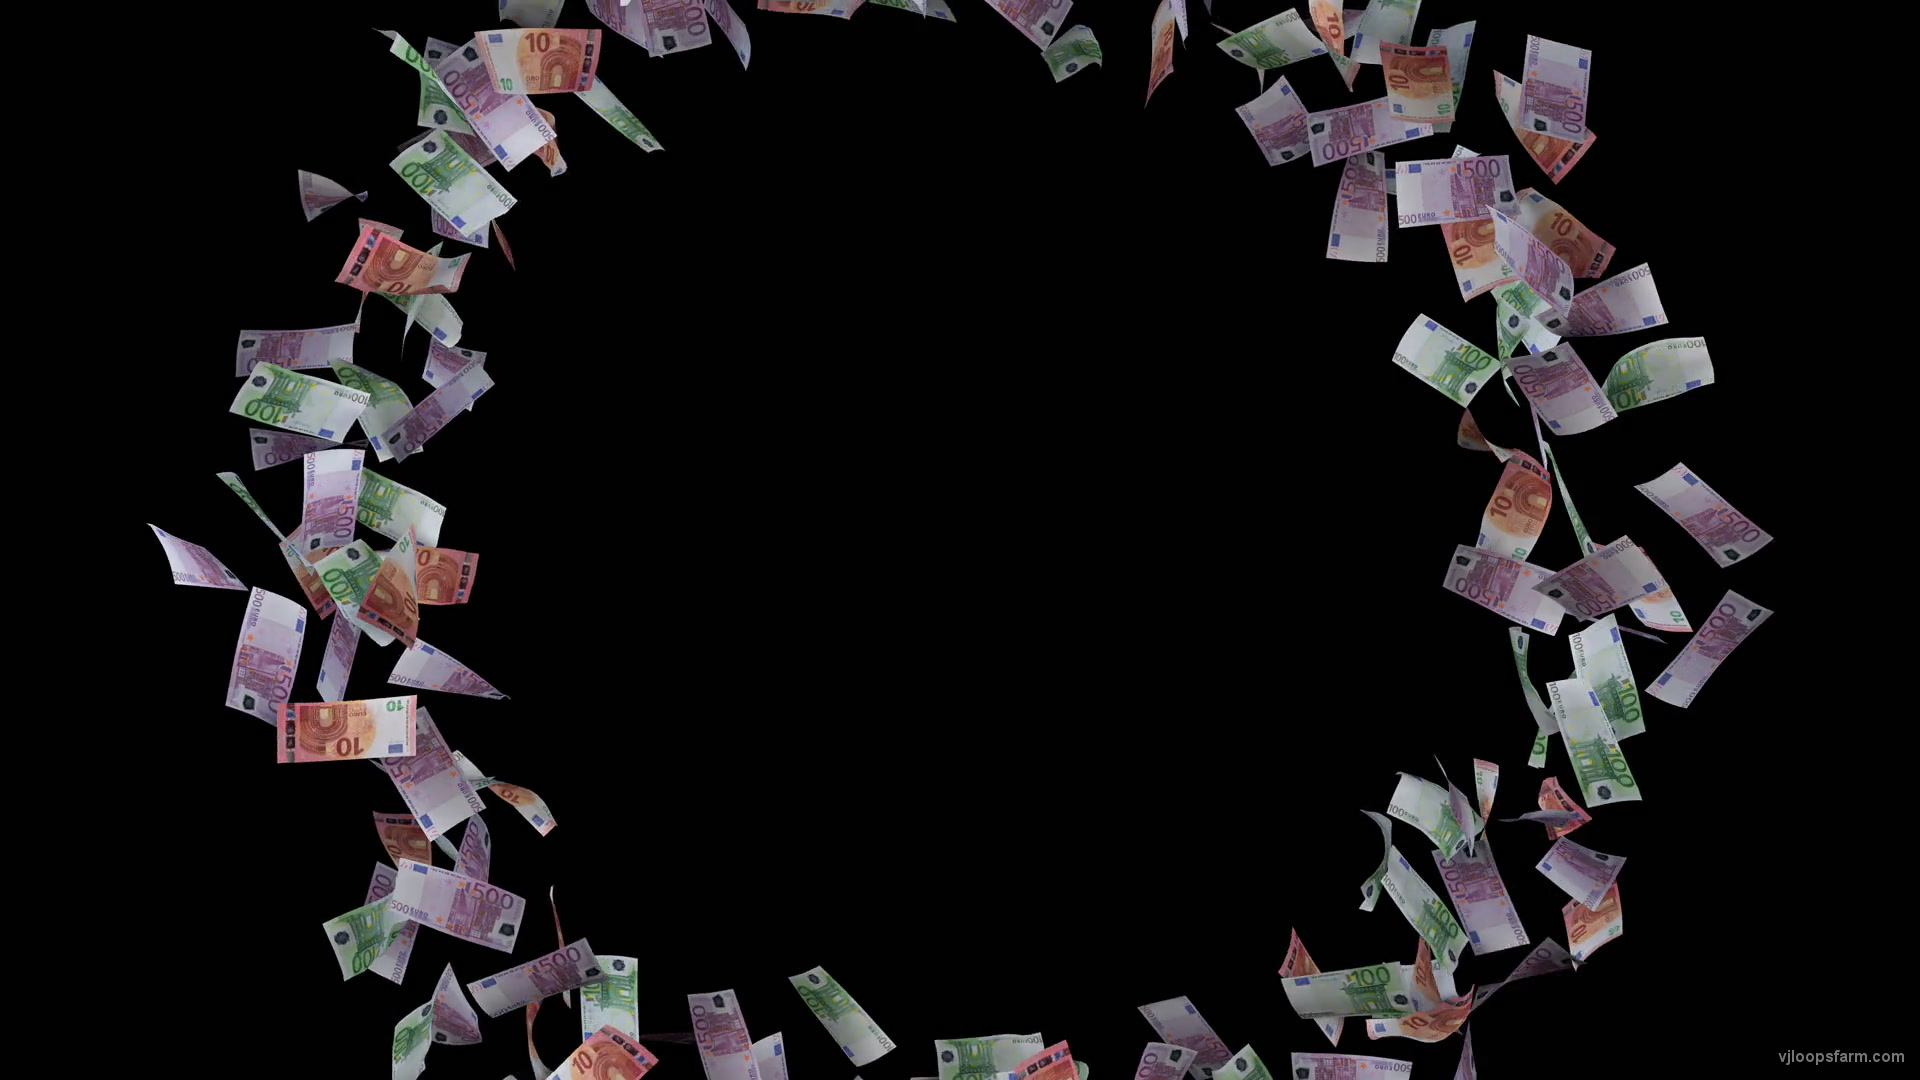 Big circle of euro bills money rotating on black background